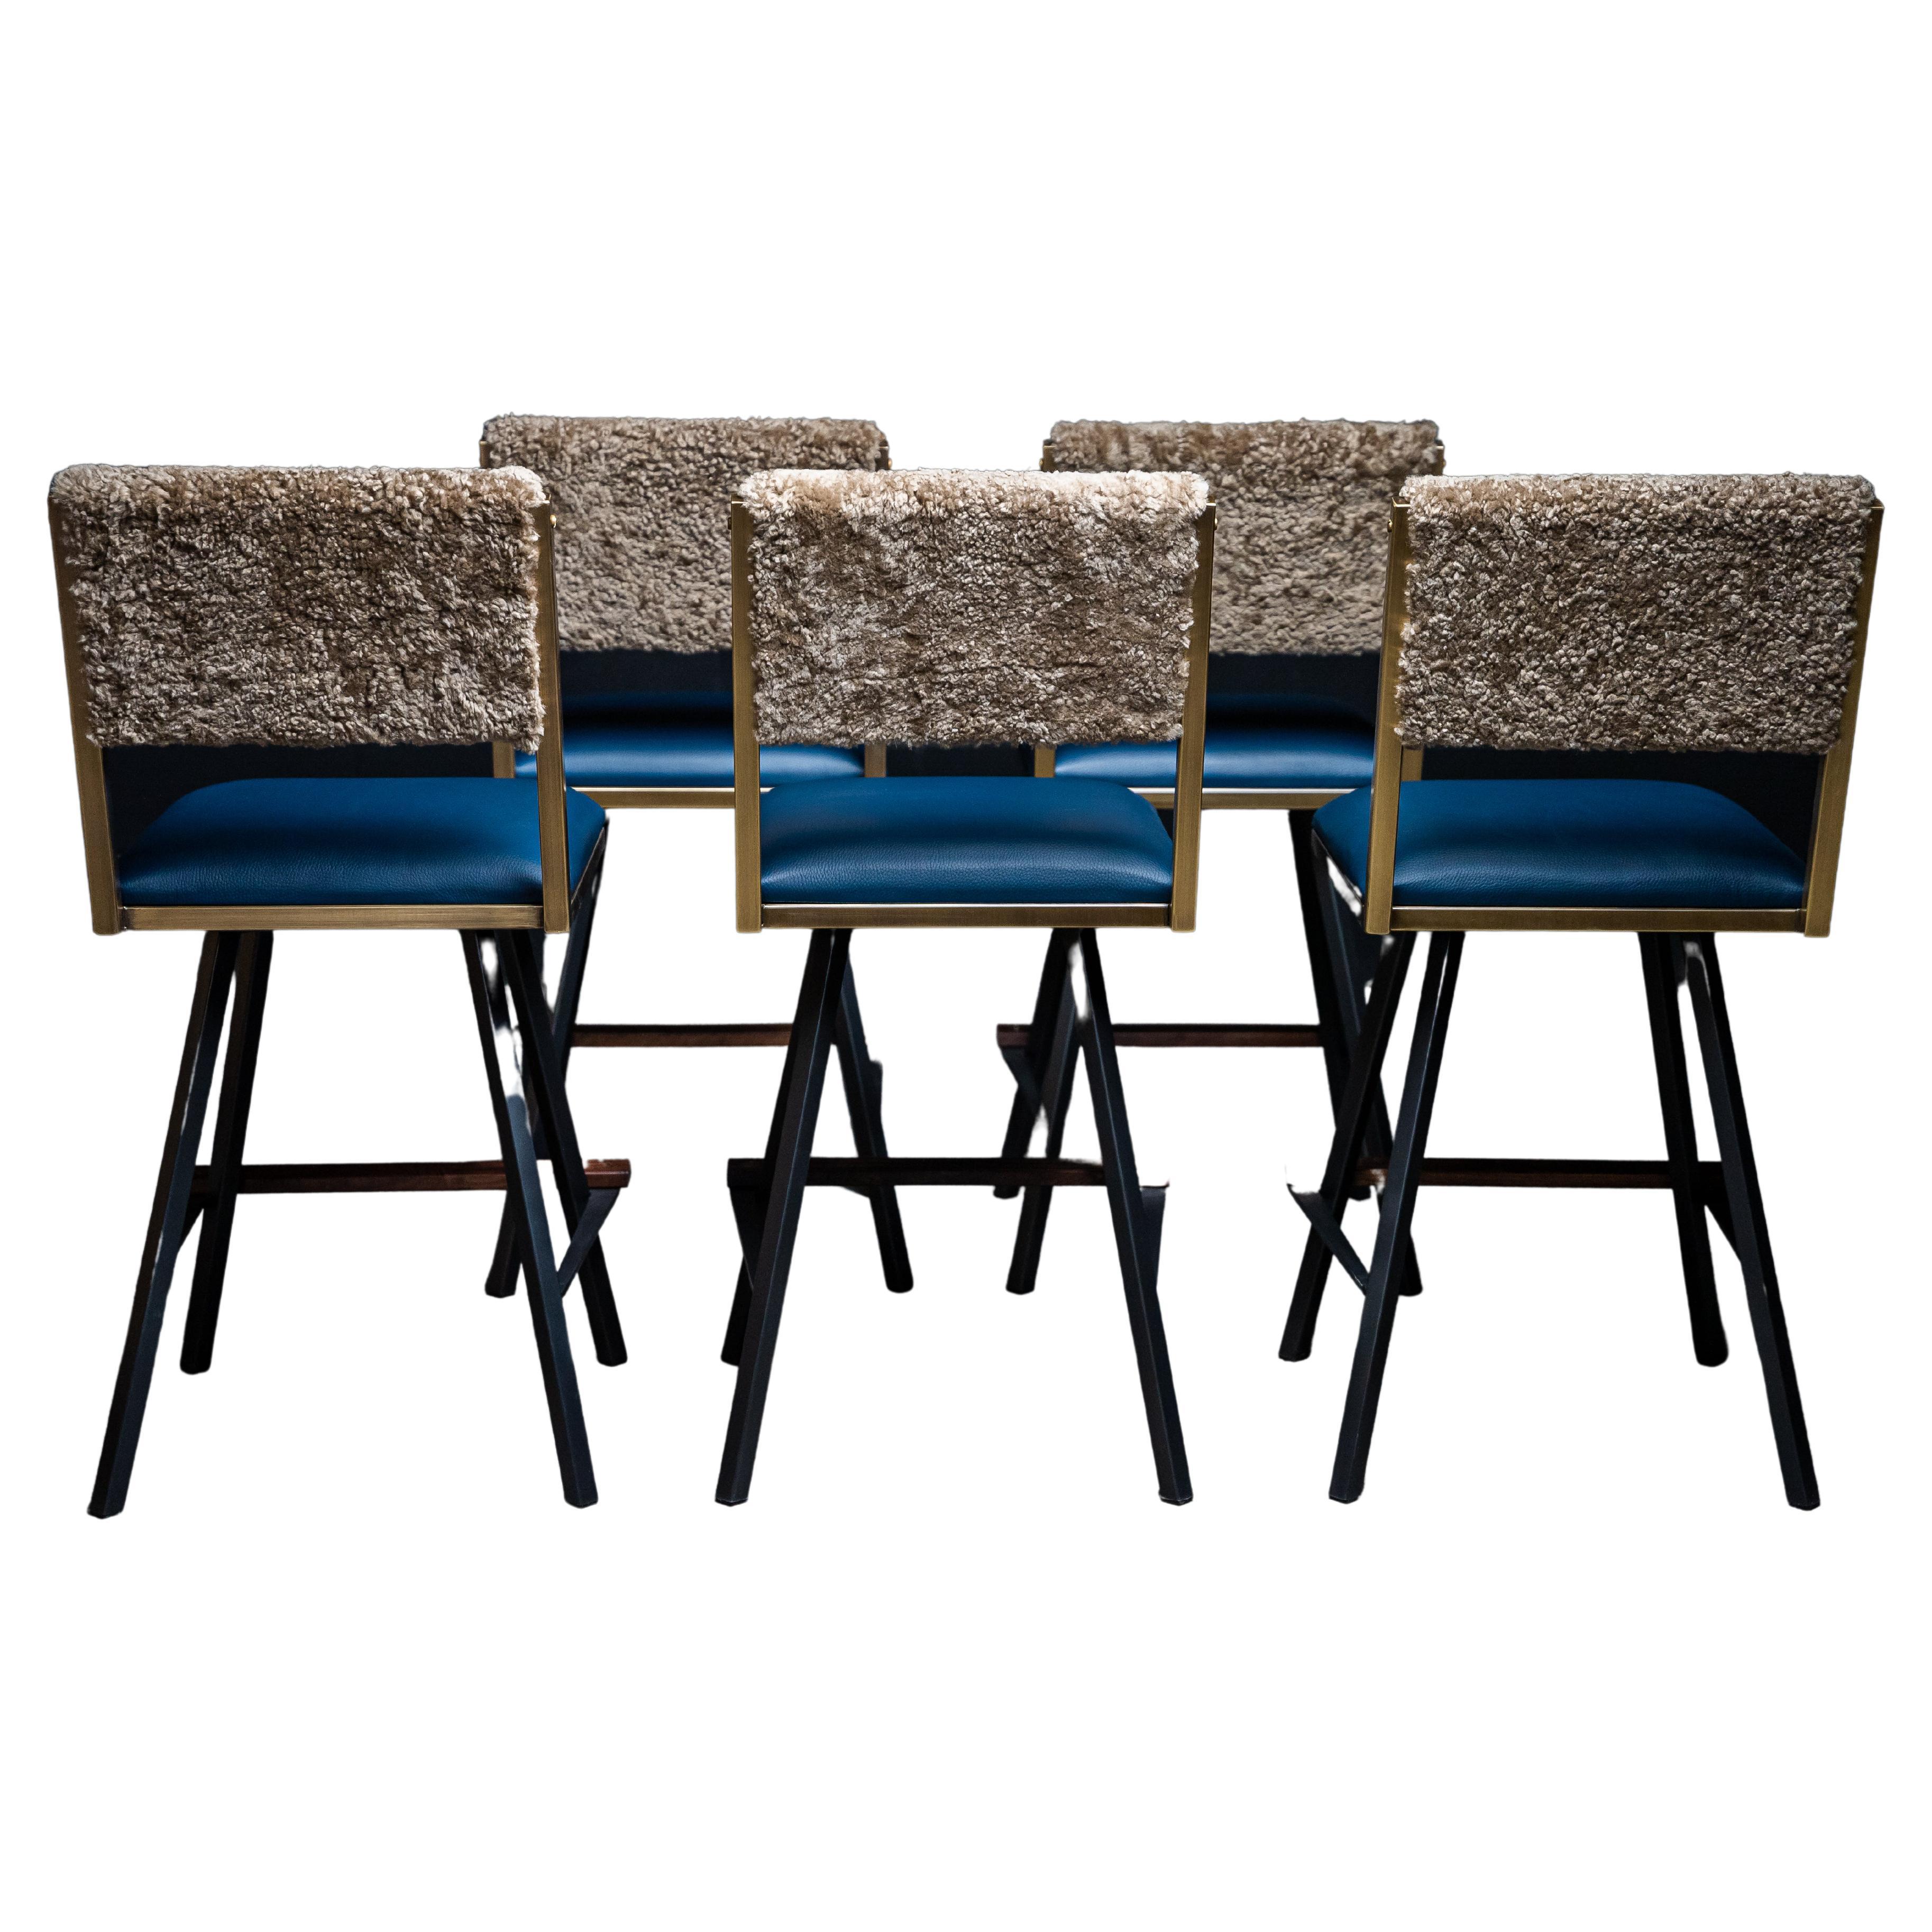 5x Shaker Swivel Counter Chairs, by Ambrozia, Walnut, Brass, Shearling & Leather